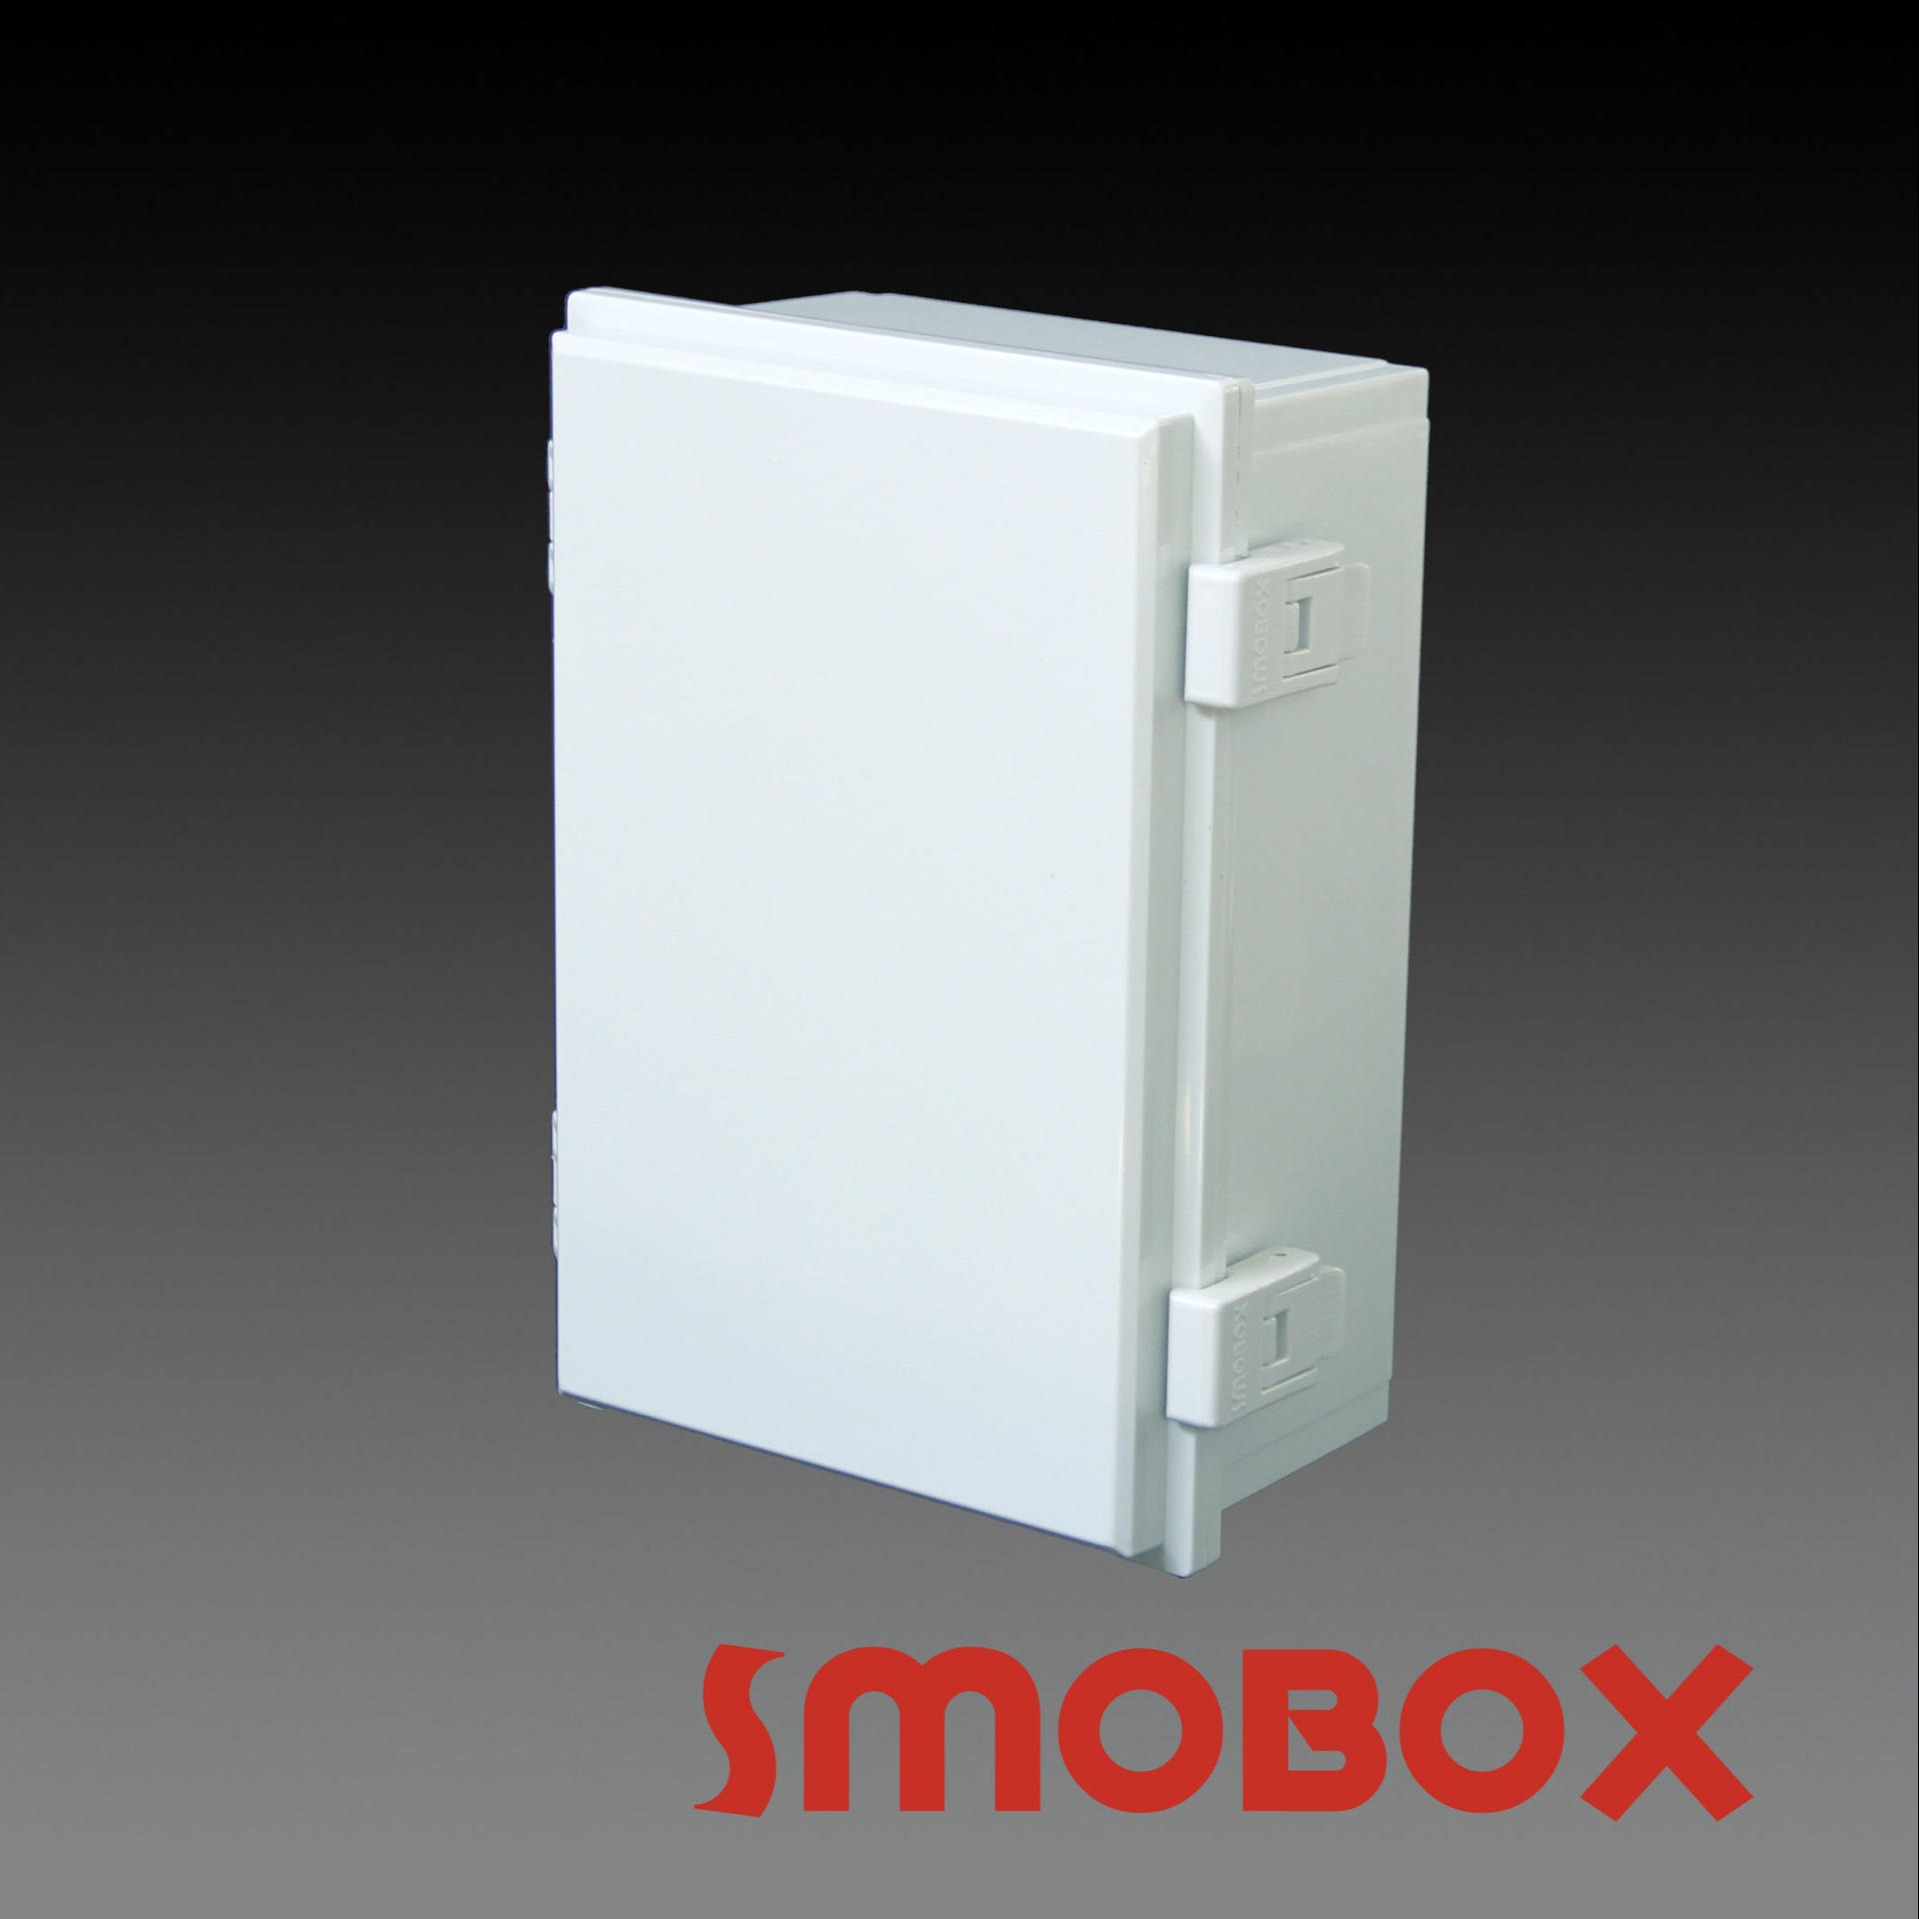 SMOBOX电气密封箱HE-172510   防水接线盒  塑料按钮盒  厂家直销  量大优惠图片